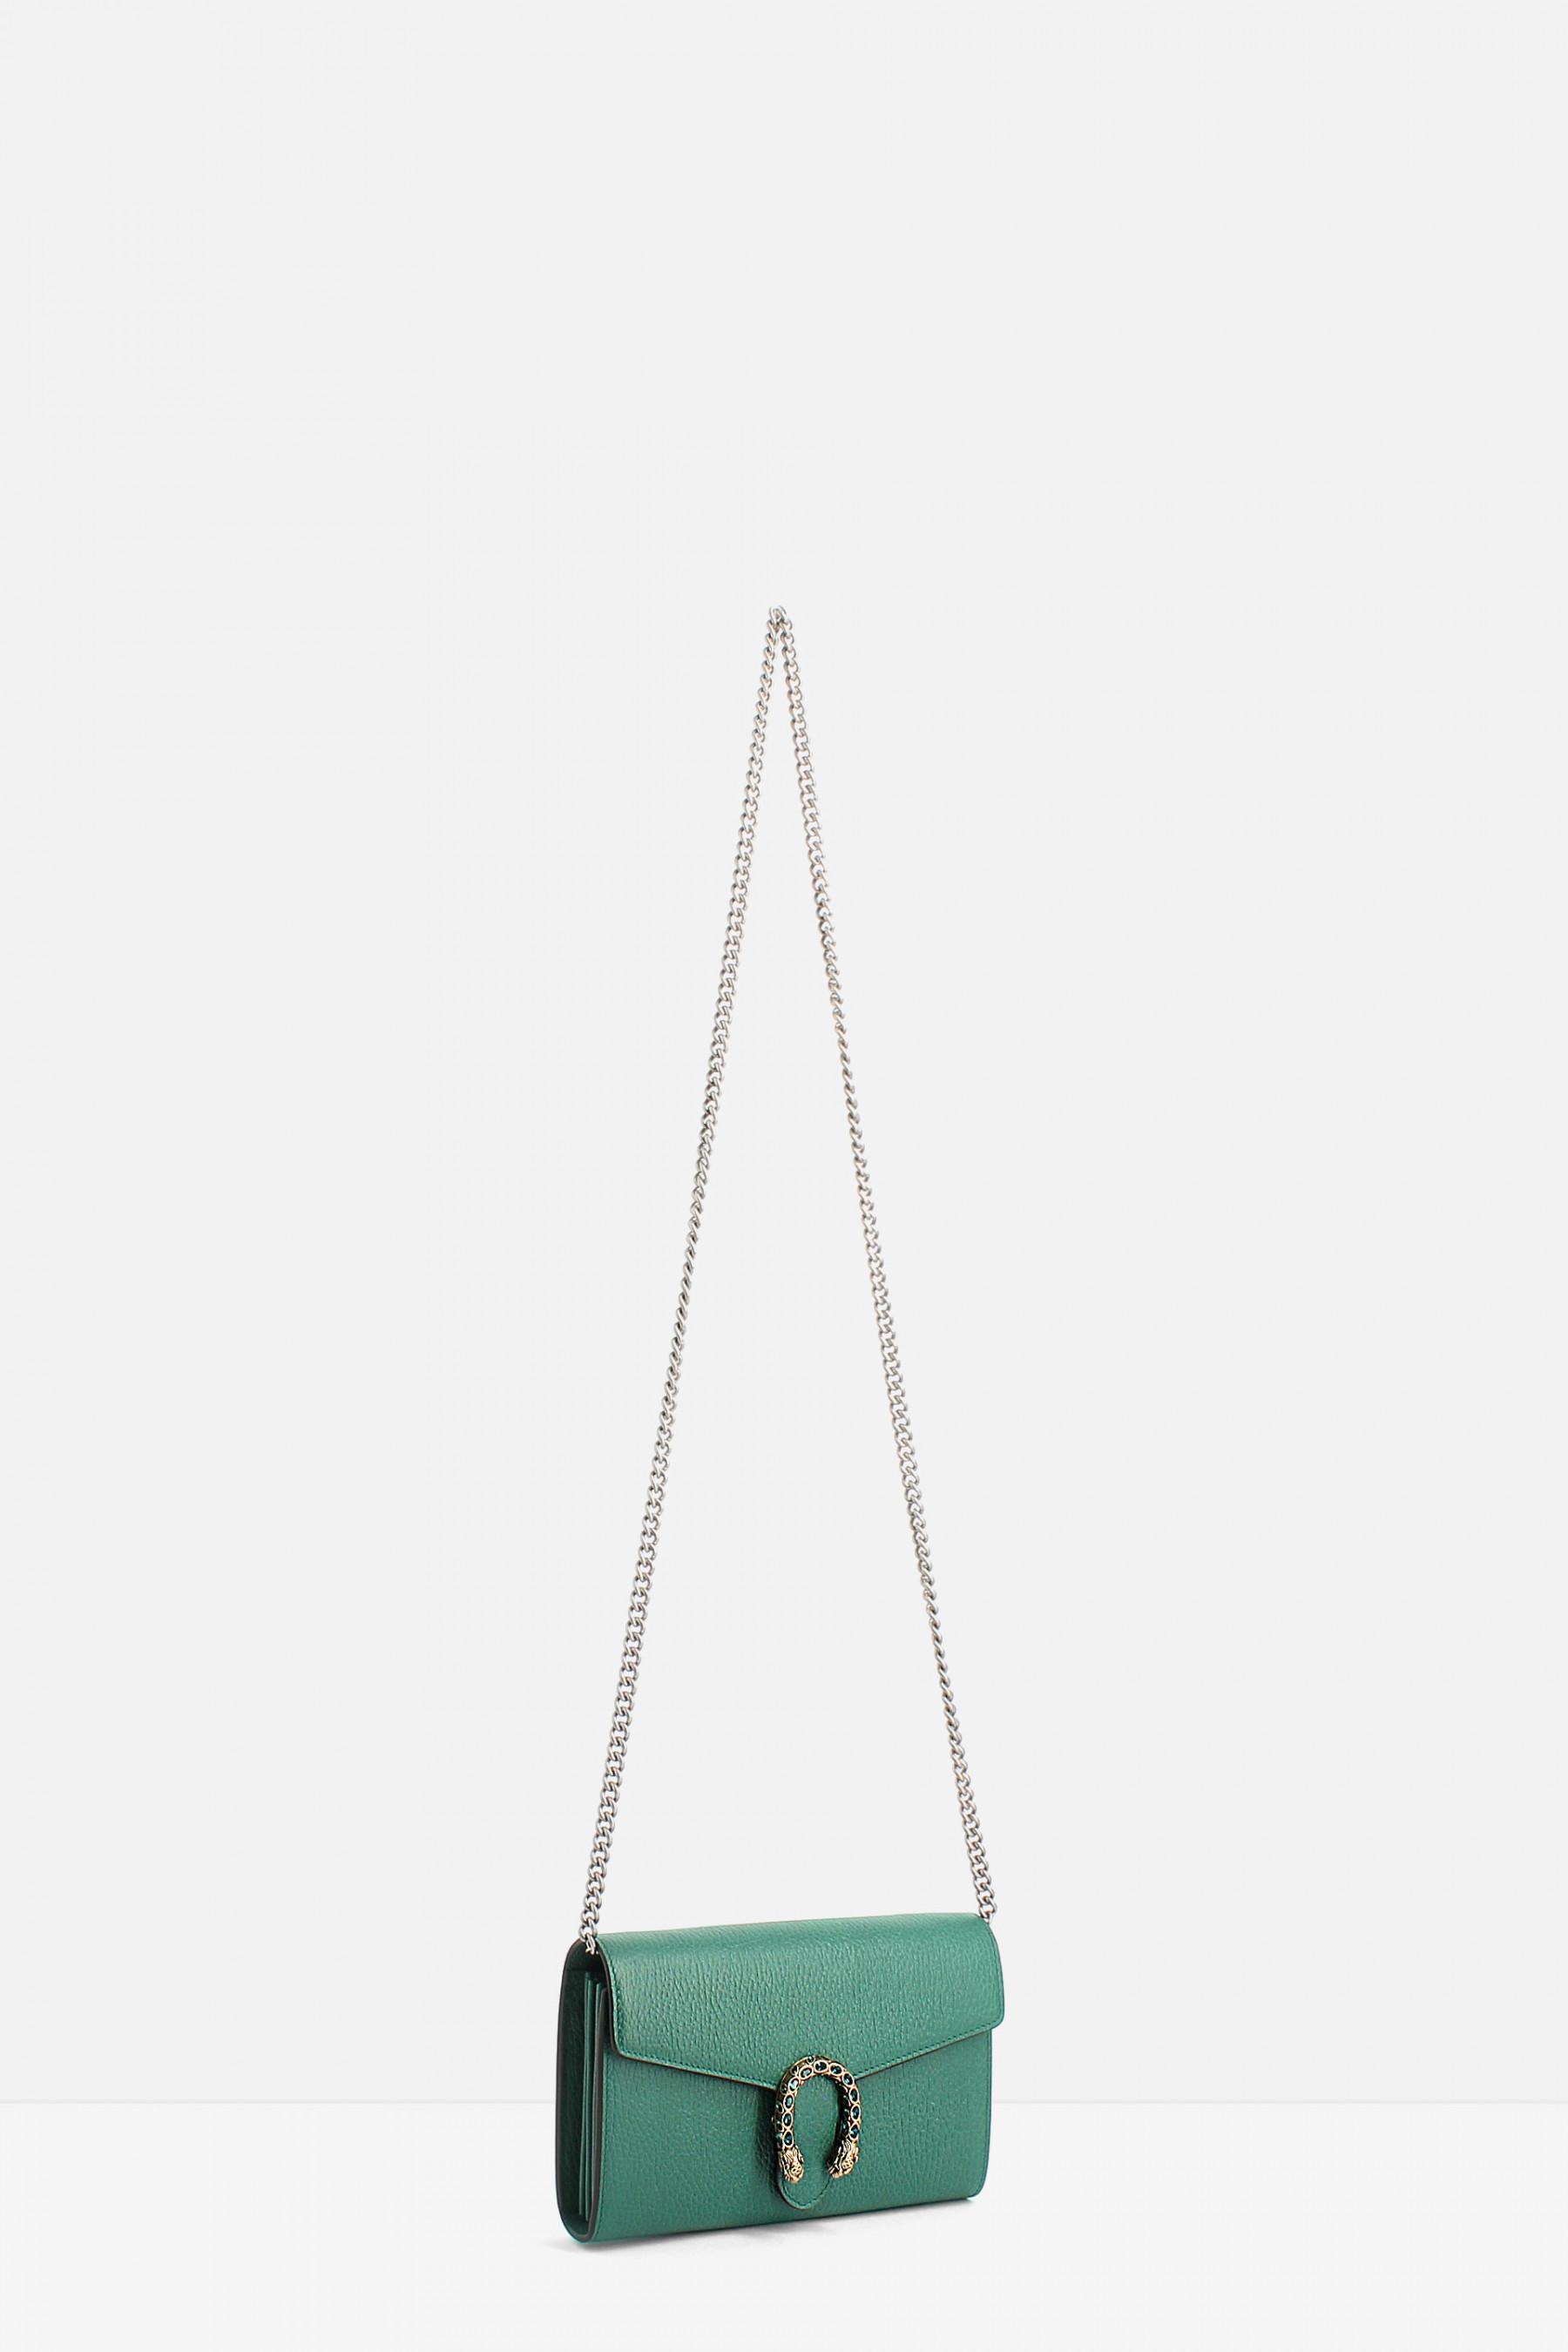 gucci green dionysus bag